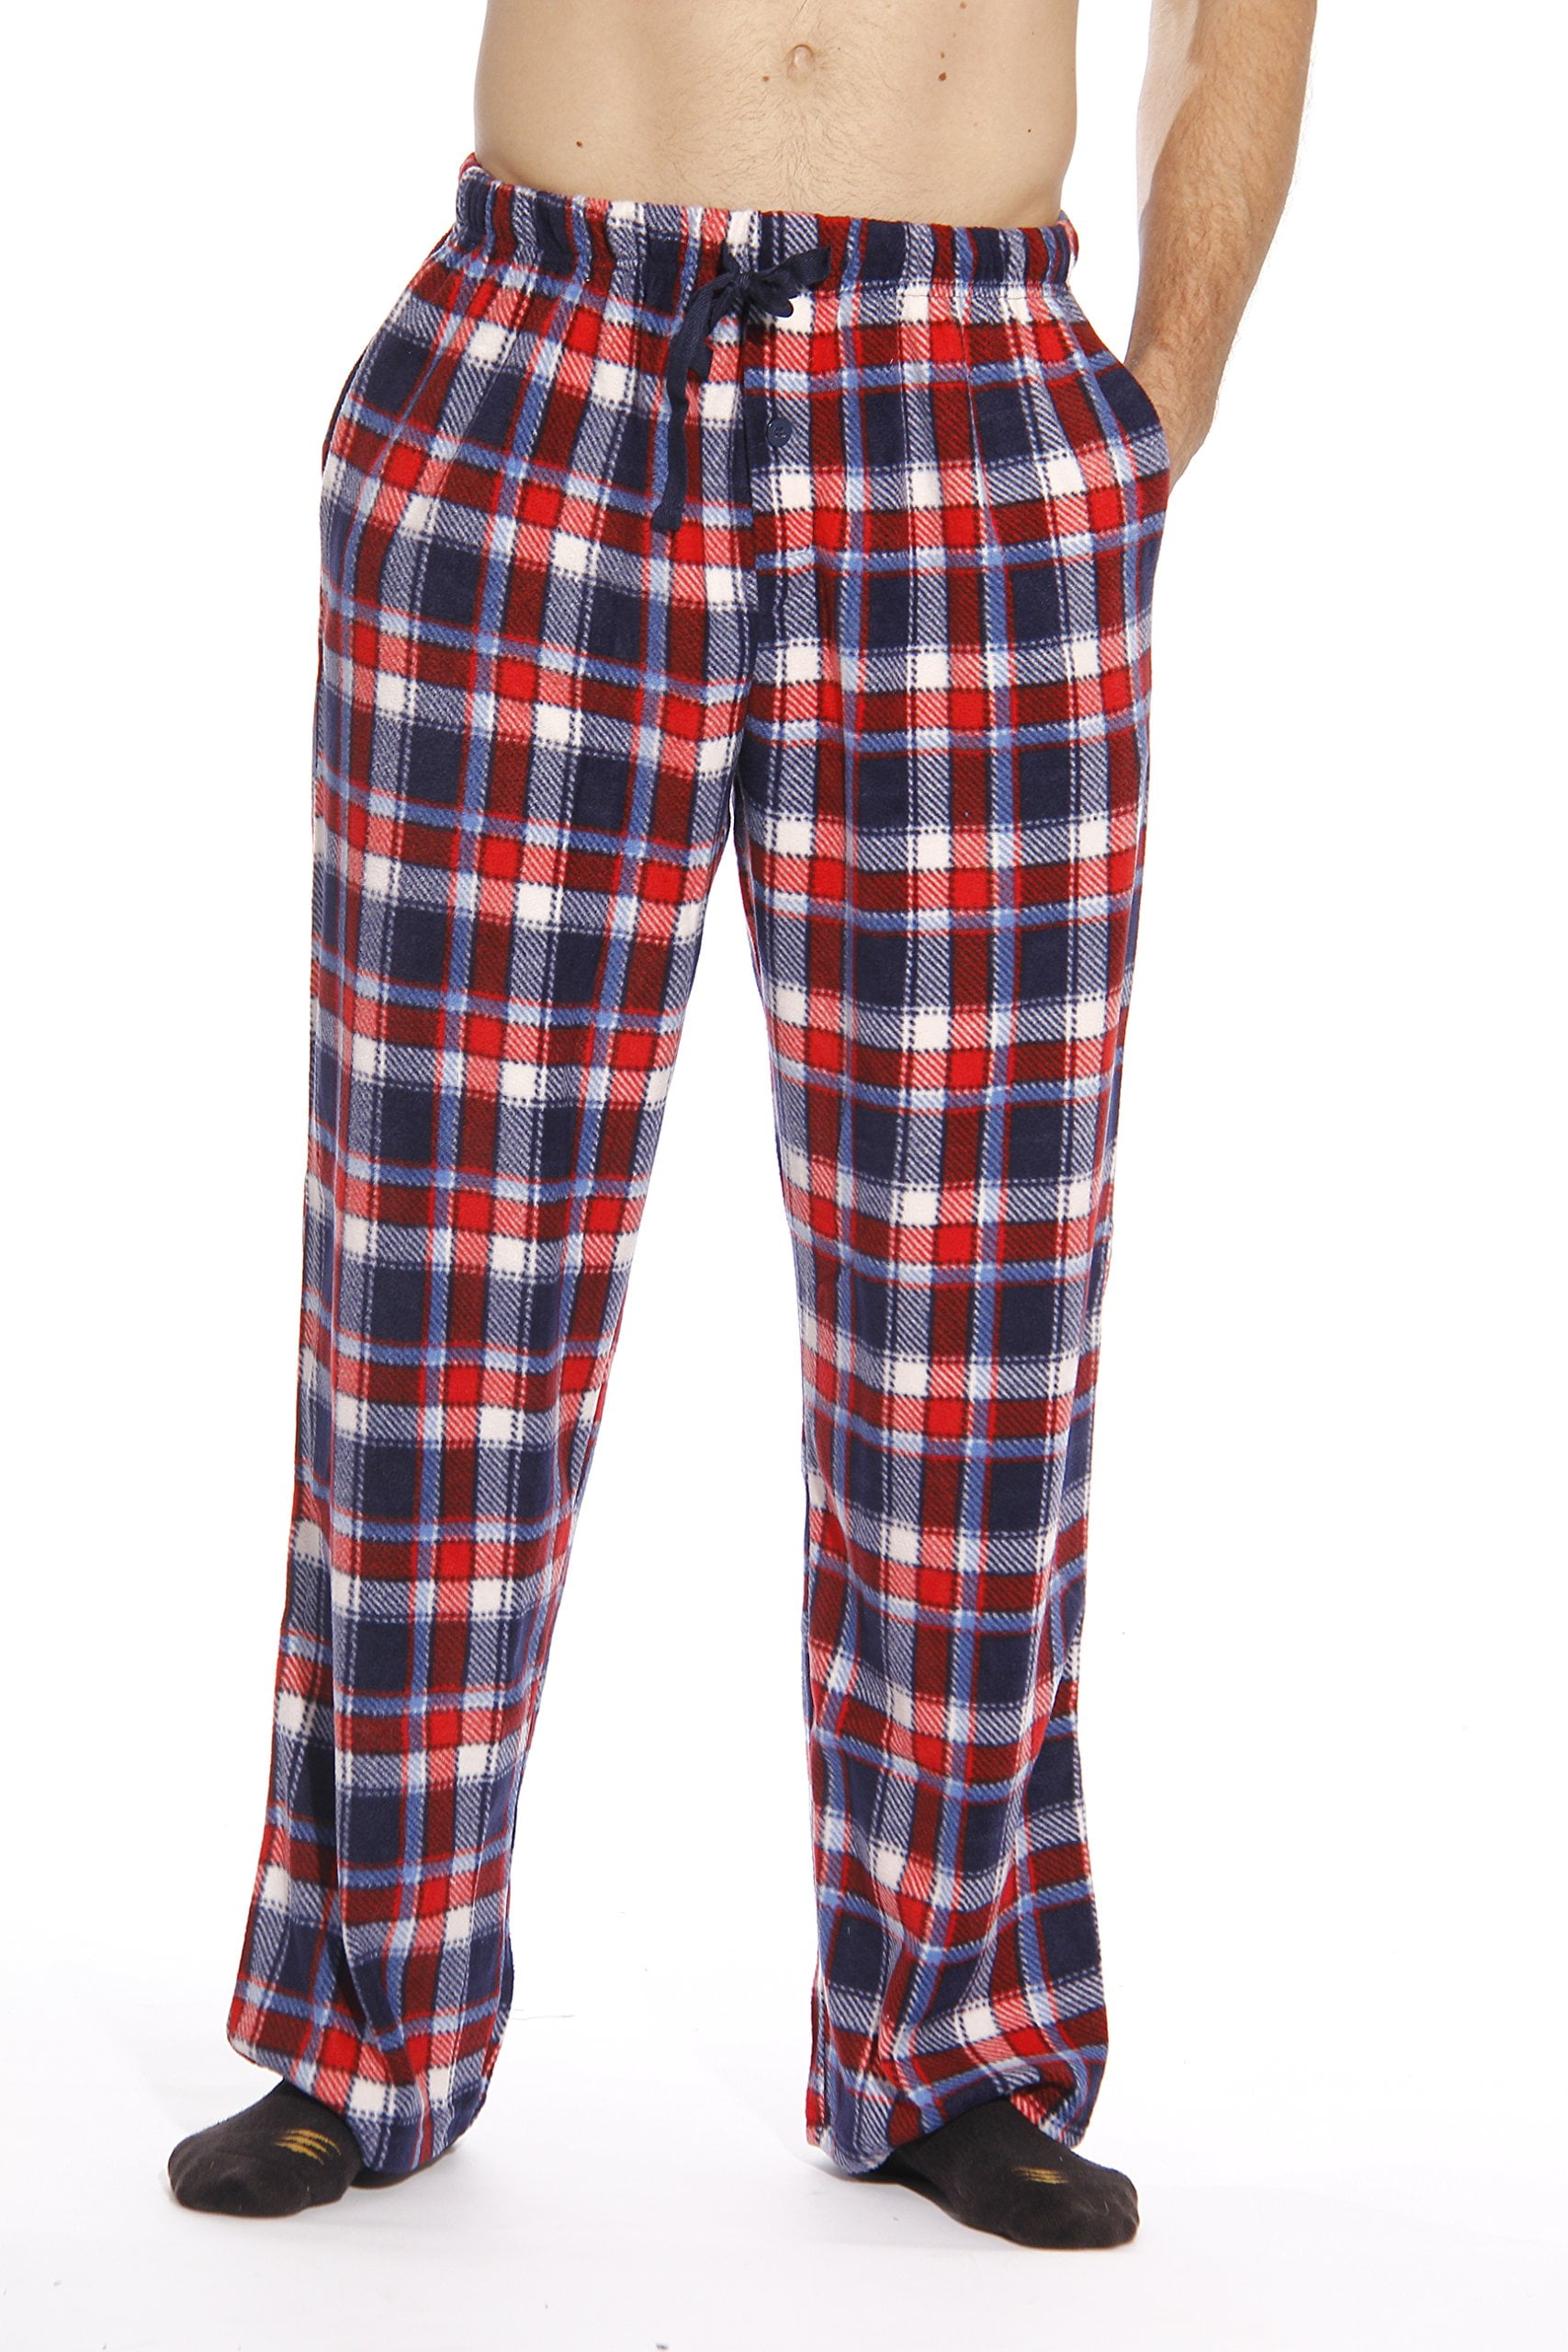 followme Microfleece Men's Buffalo Plaid Pajama Pants with Pockets